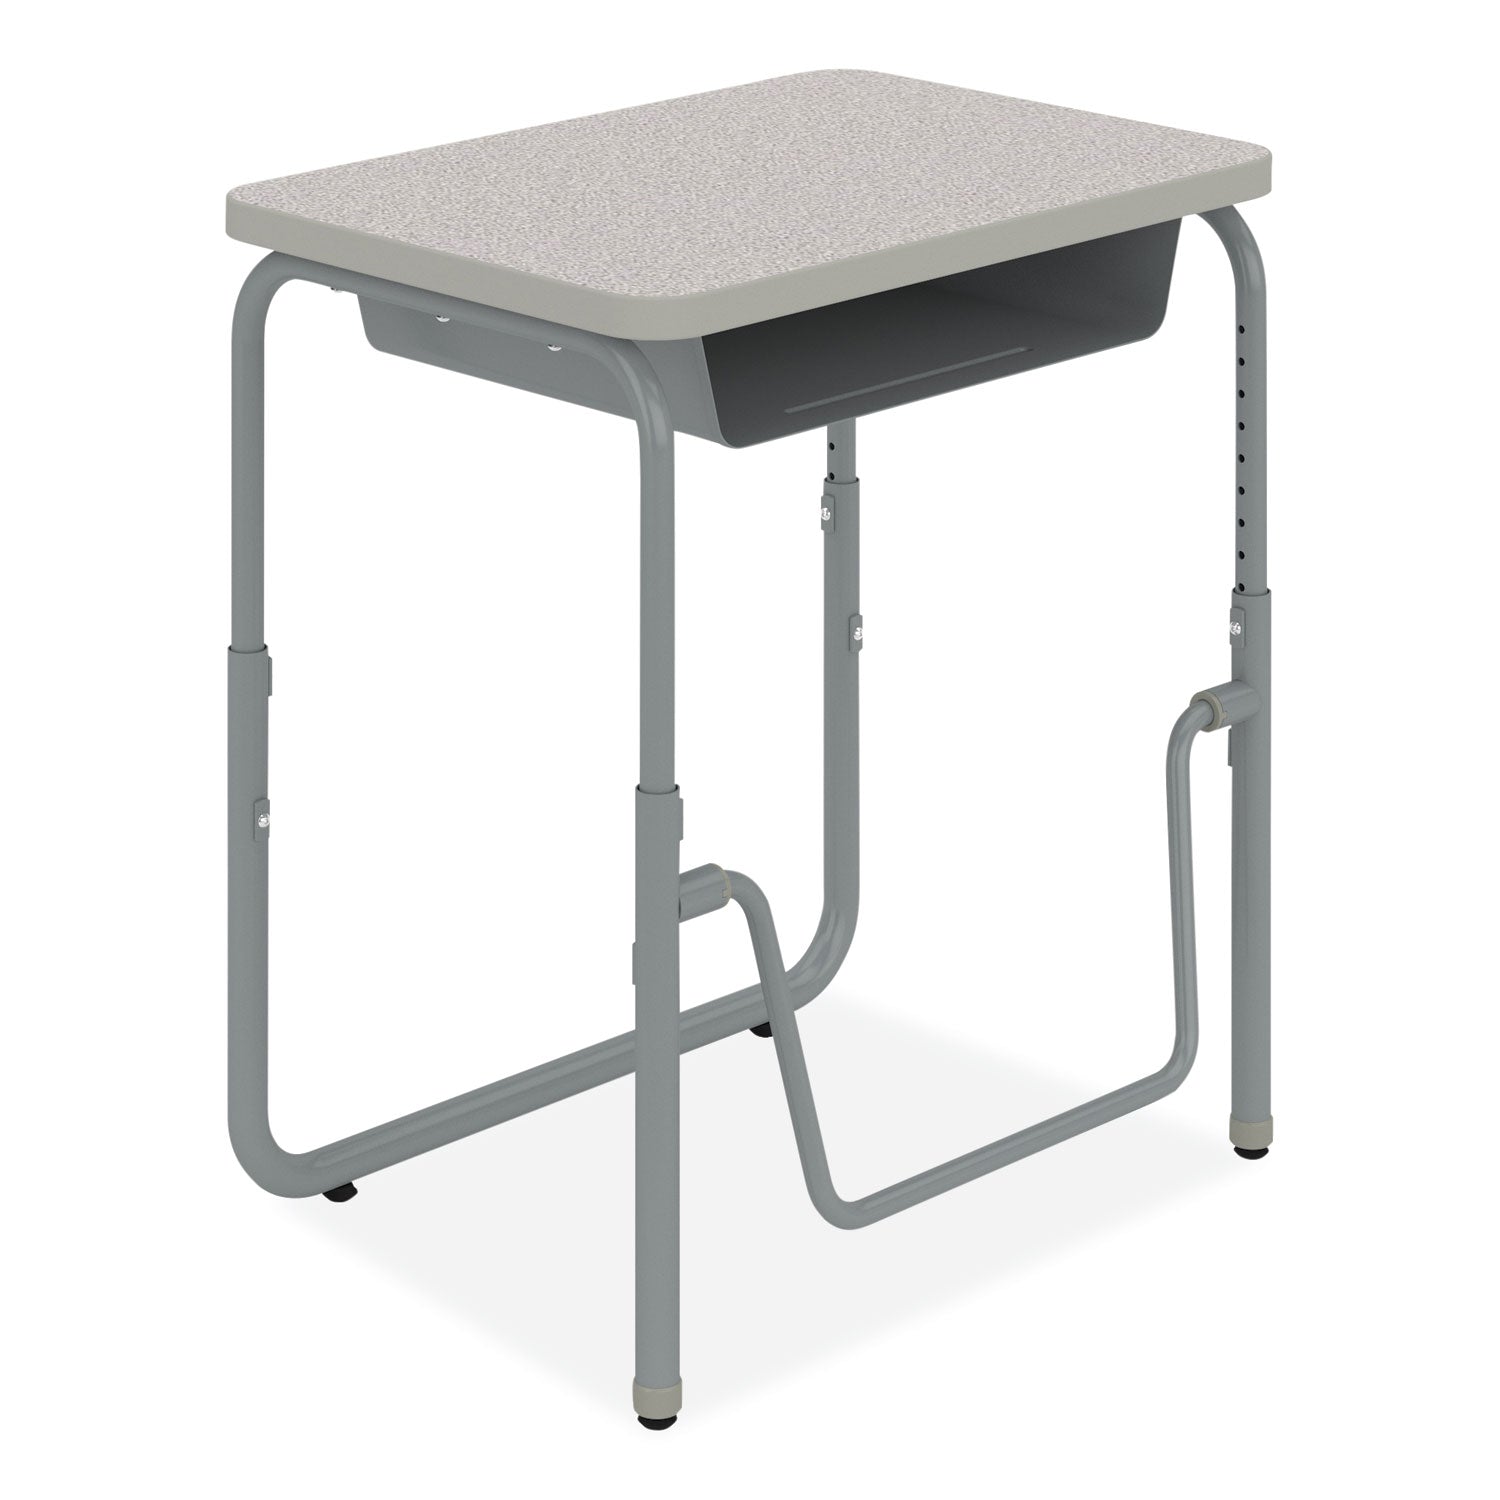 alphabetter-20-height-adjustable-student-desk-with-pendulum-bar-2775-x-1975-x-22-to-30-pebble-gray_saf1222gr - 1